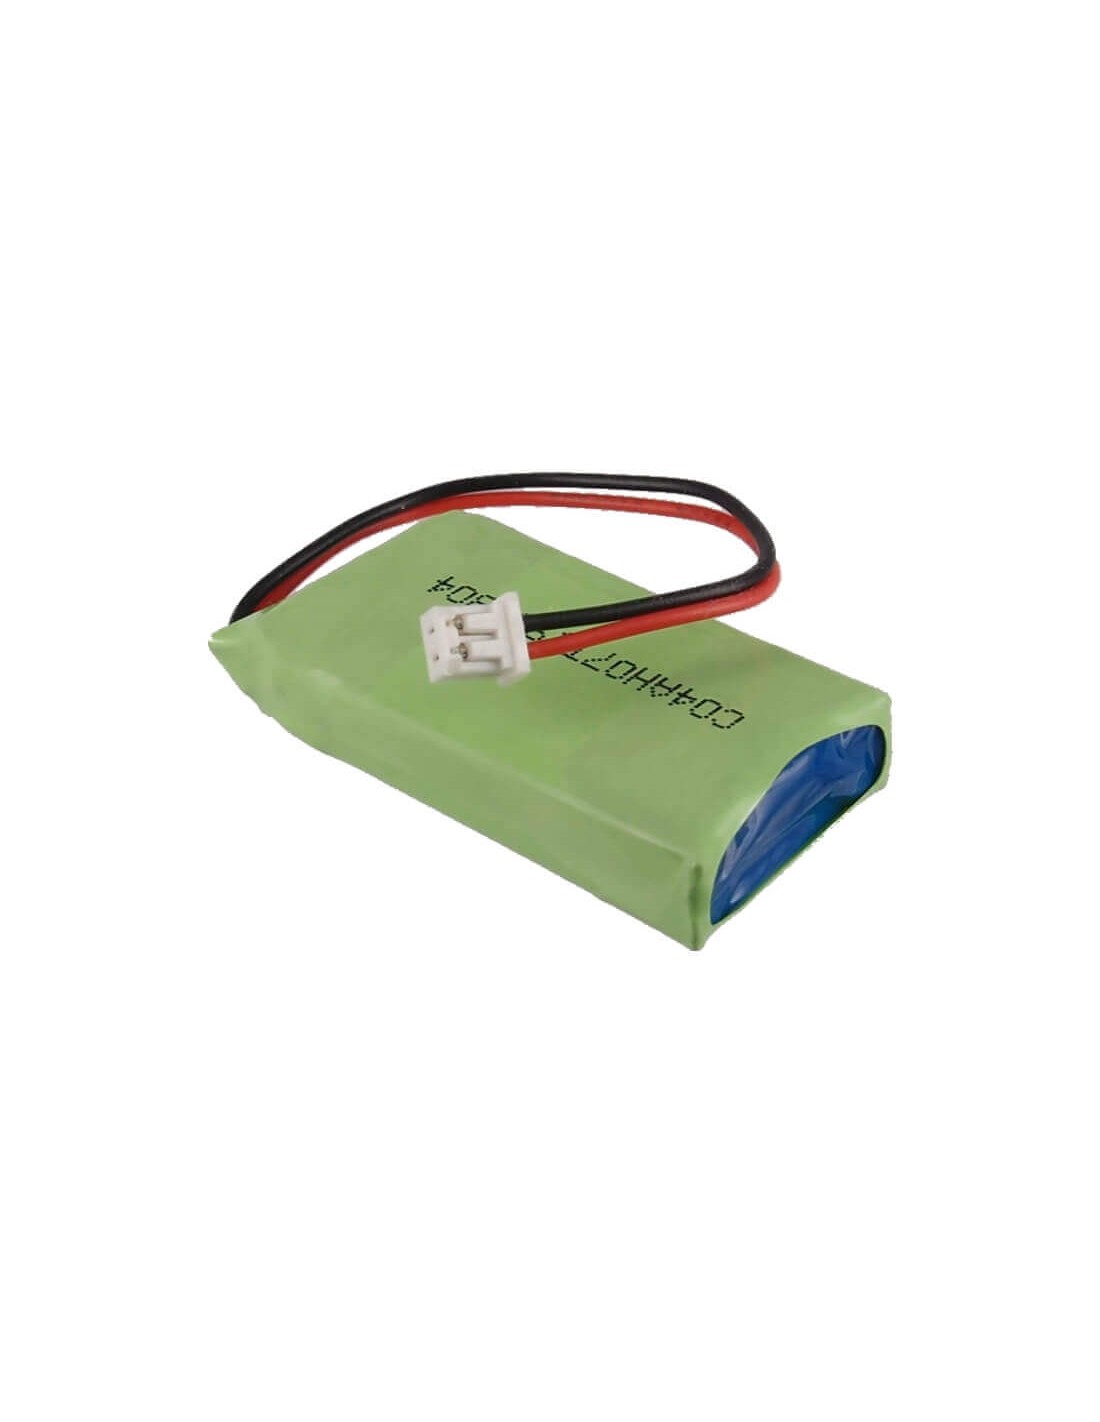 Battery for Dogtra Transmitter 2300ncp, Transmitter 2302ncp, 2302ncp Advance 7.4V, 500mAh - 3.70Wh